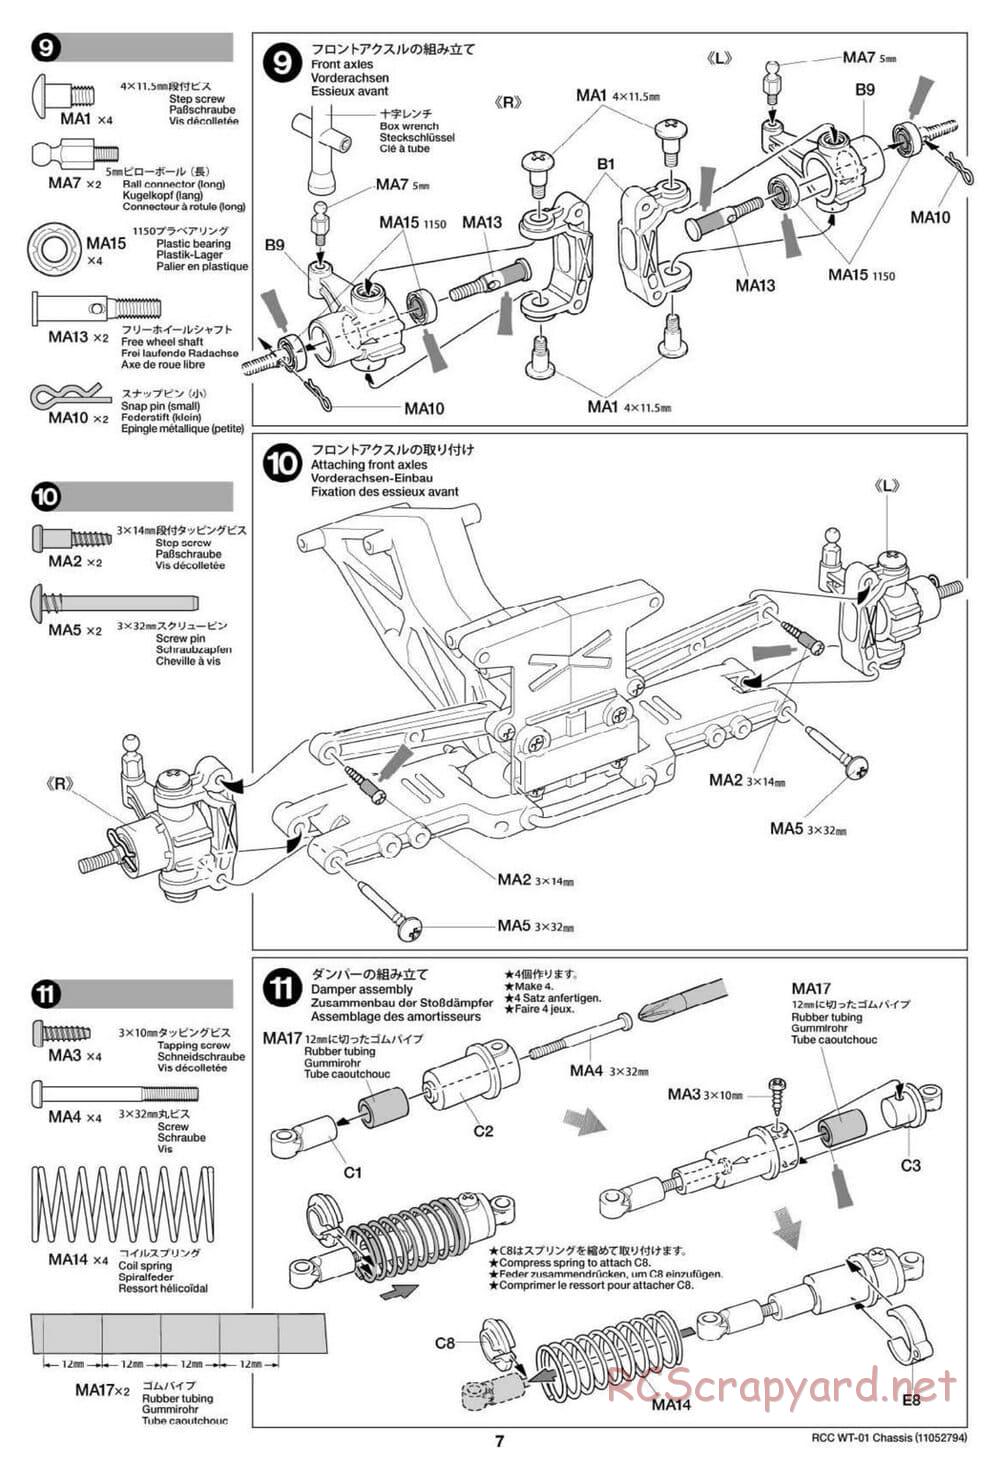 Tamiya - Mud Blaster II - WT-01 Chassis - Manual - Page 7